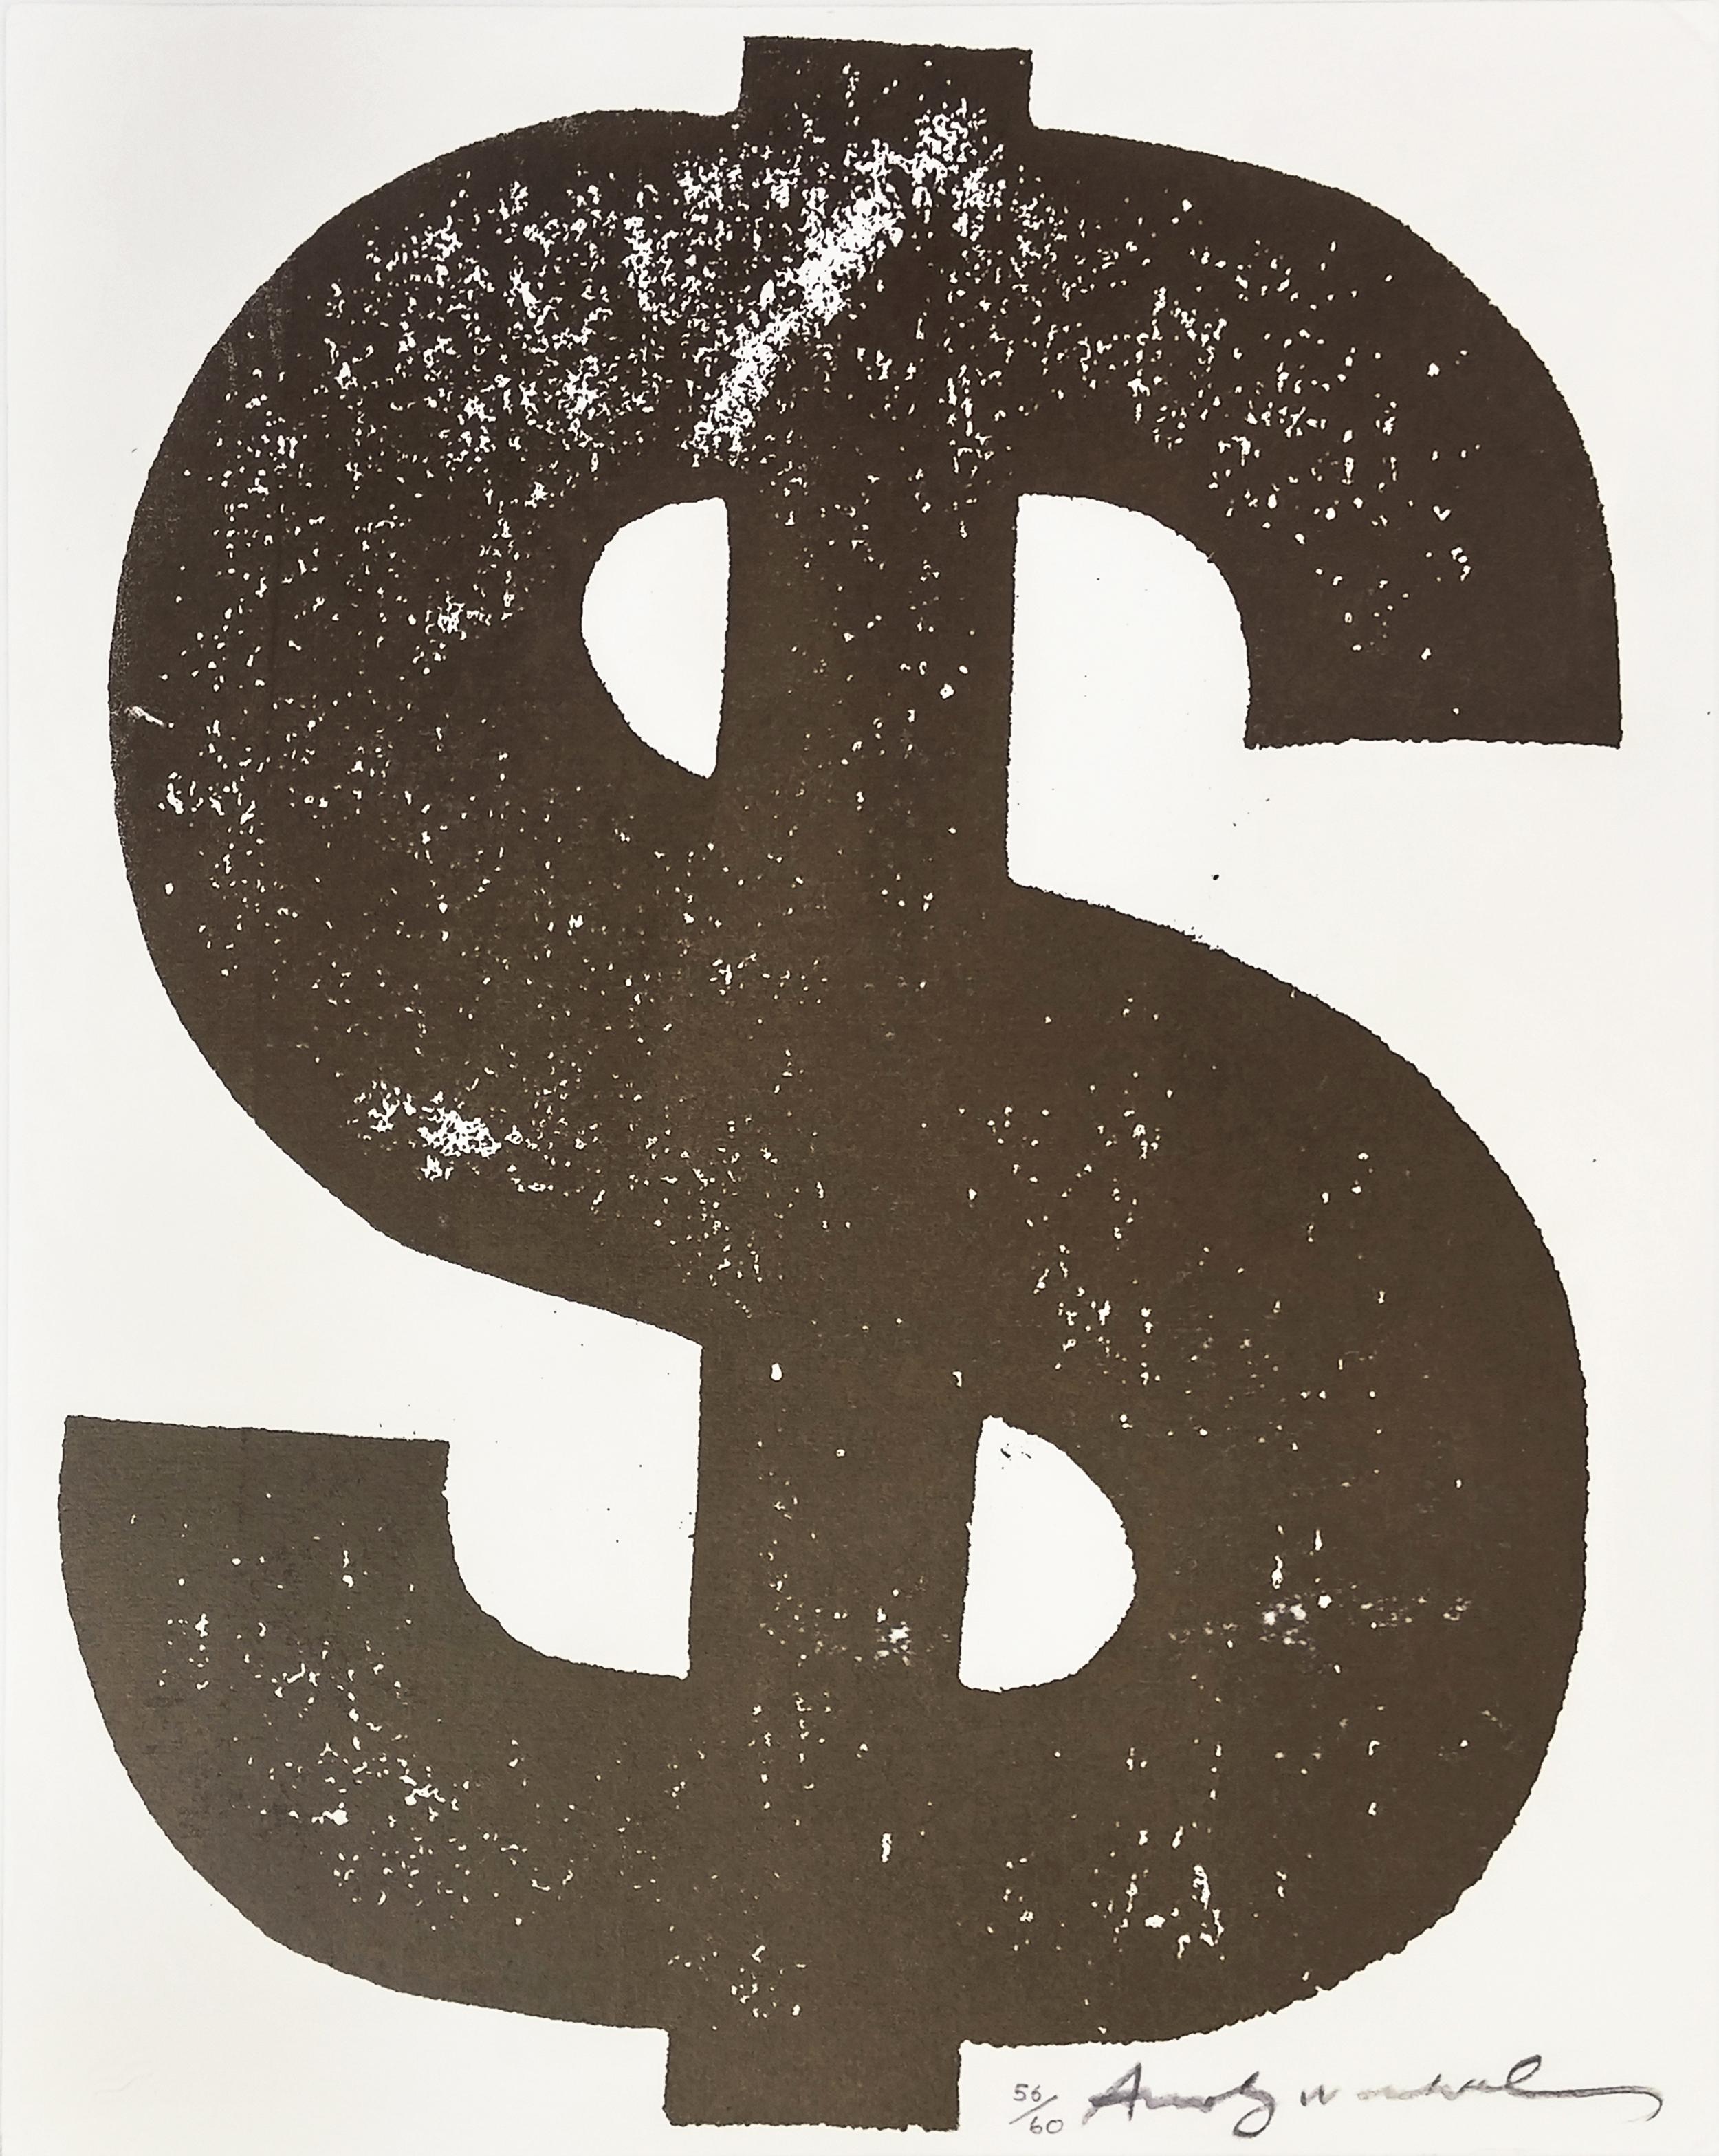 Andy Warhol Figurative Print - $(1) -- FS IIA.277